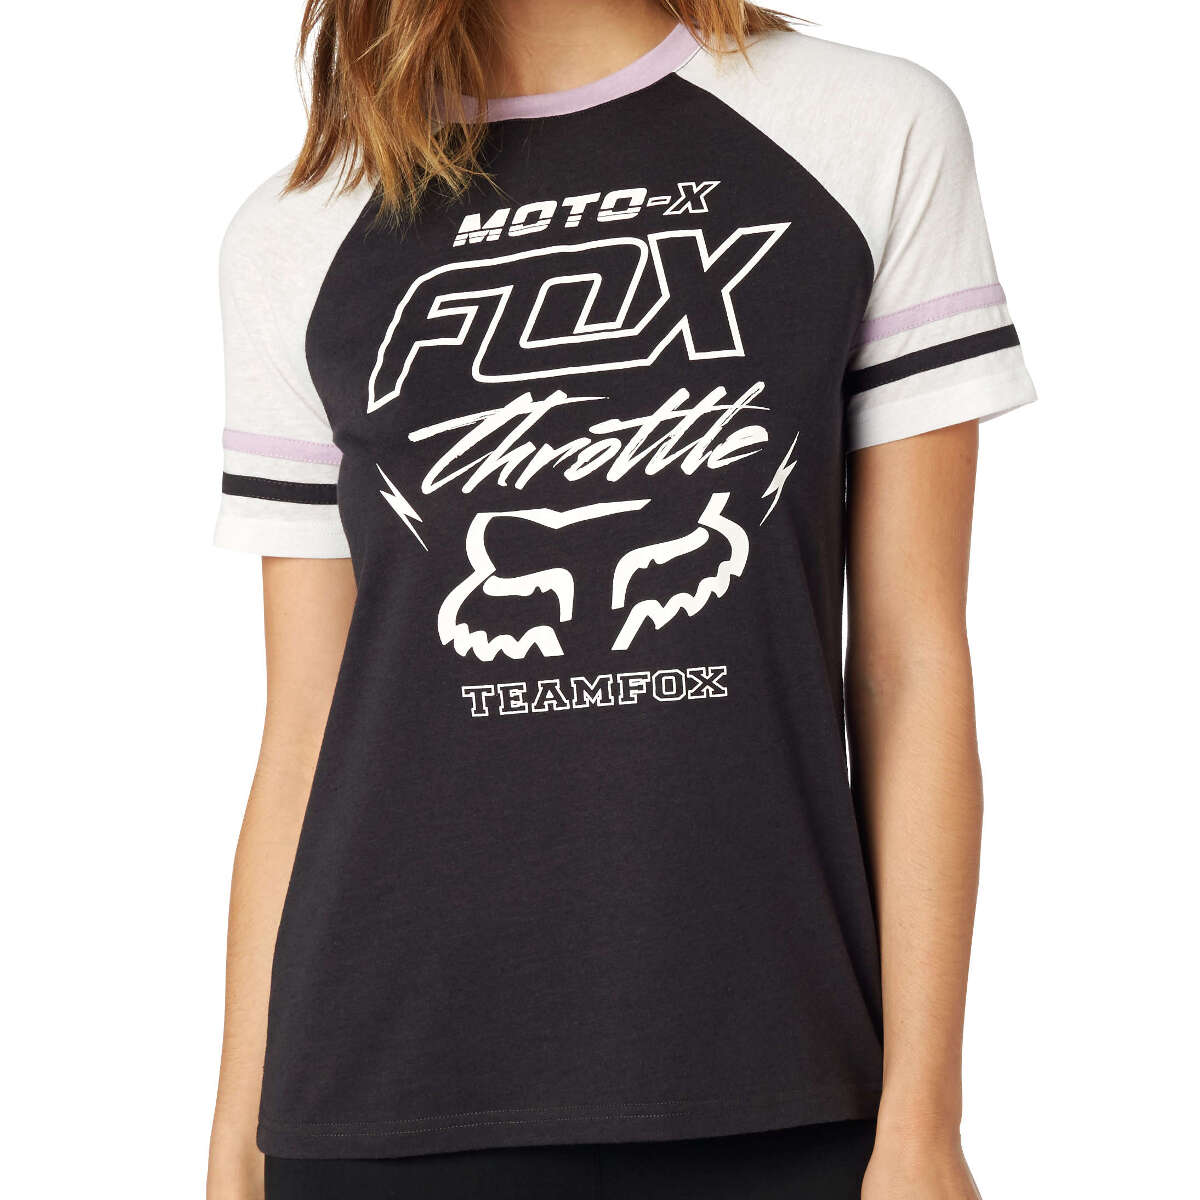 Fox Girls T-Shirt Throttle Maniac Top Black Vintage